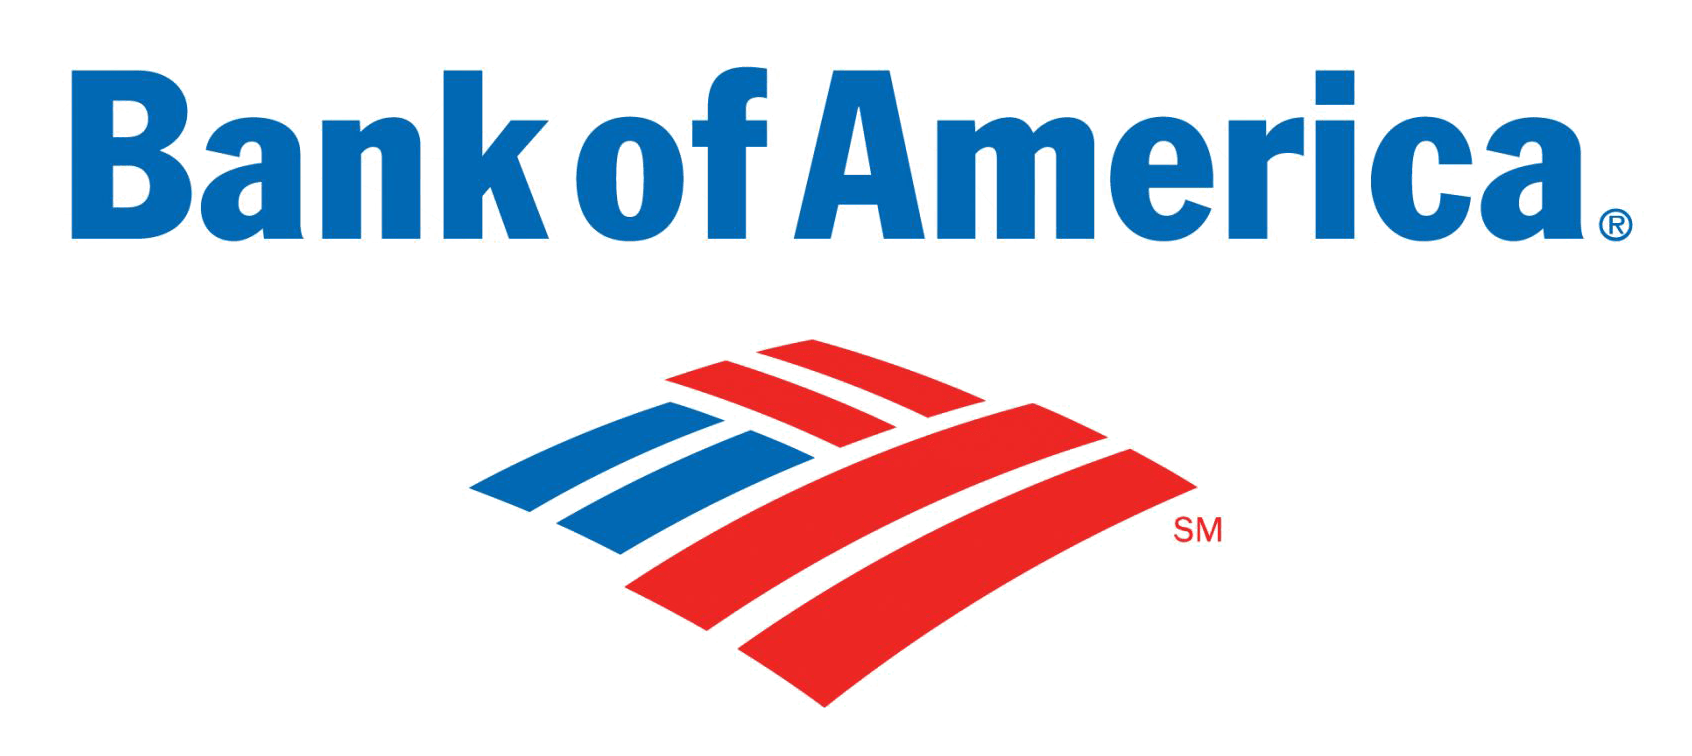 Baml Logo - Bank of America. $BAC Stock. Shares Surge On Q2 Profit Rise